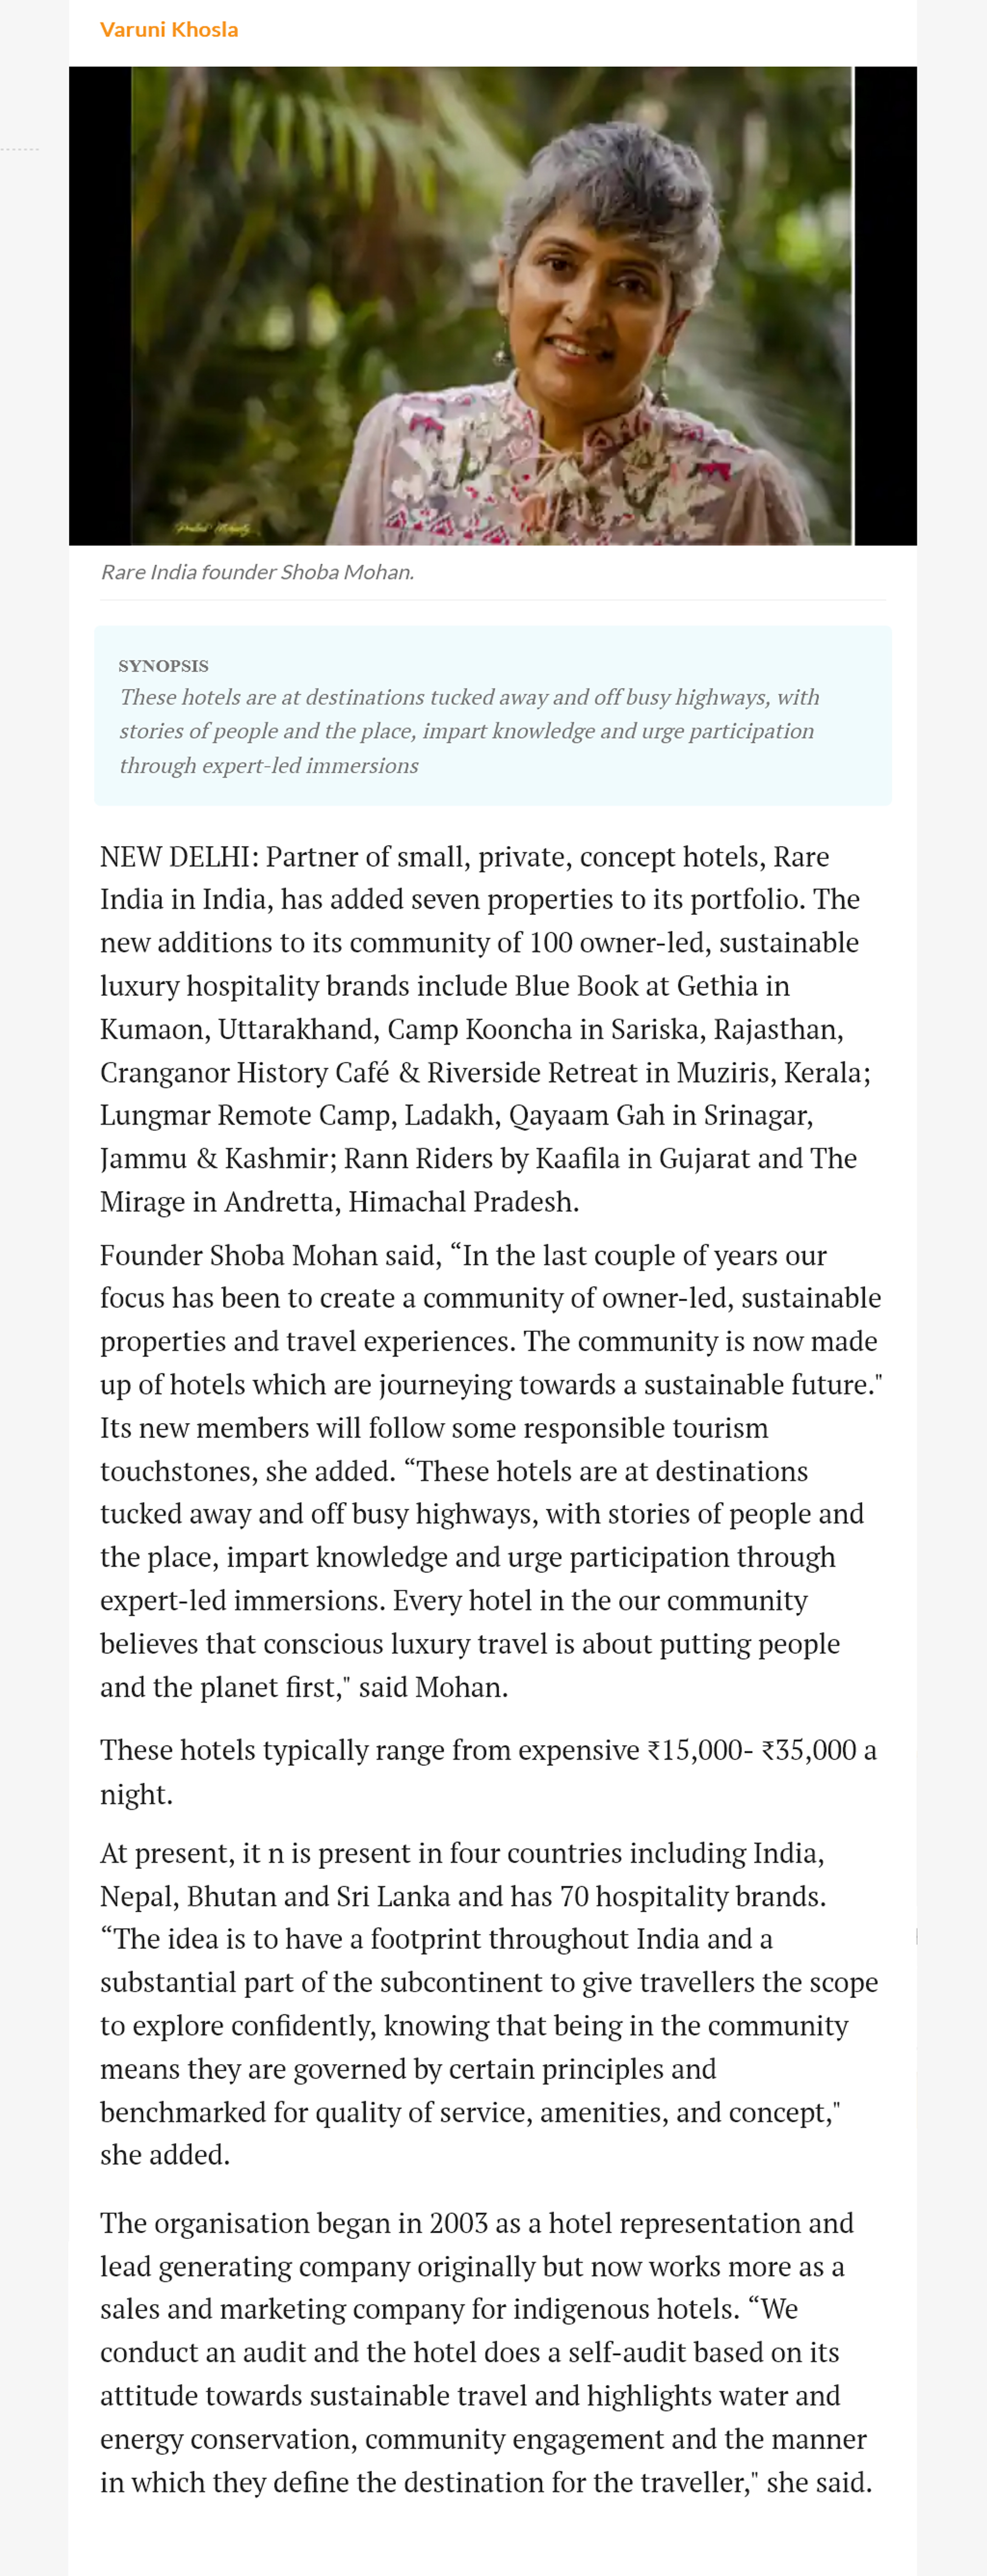 Luxury hotels platform Rare India adds 7 properties to its portfolio